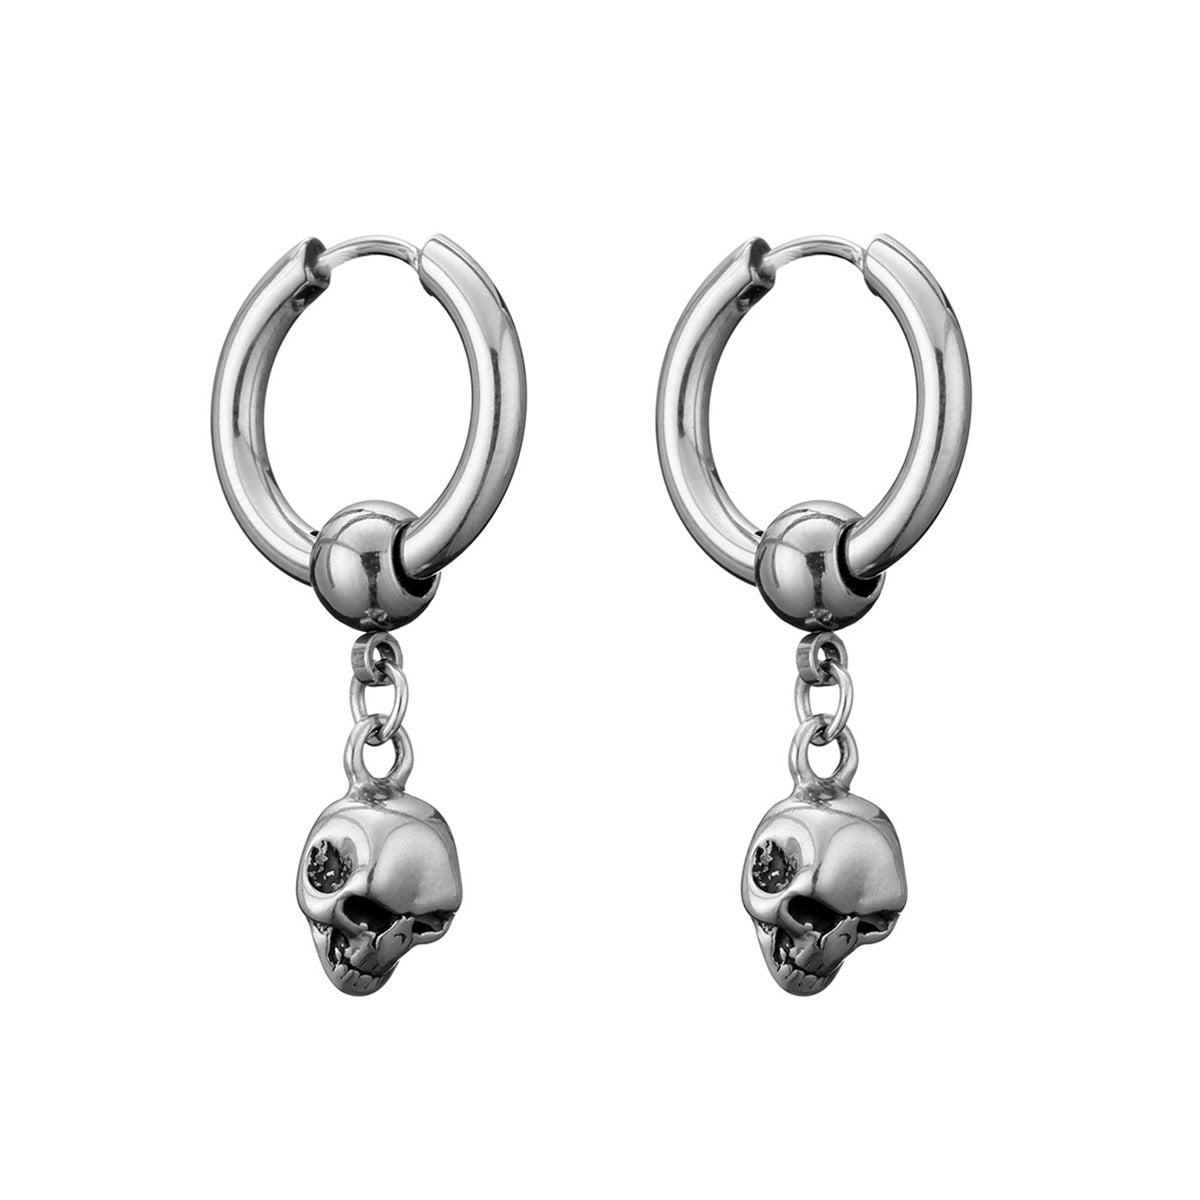 Skull pendant earrings ring earrings (steel 316L)